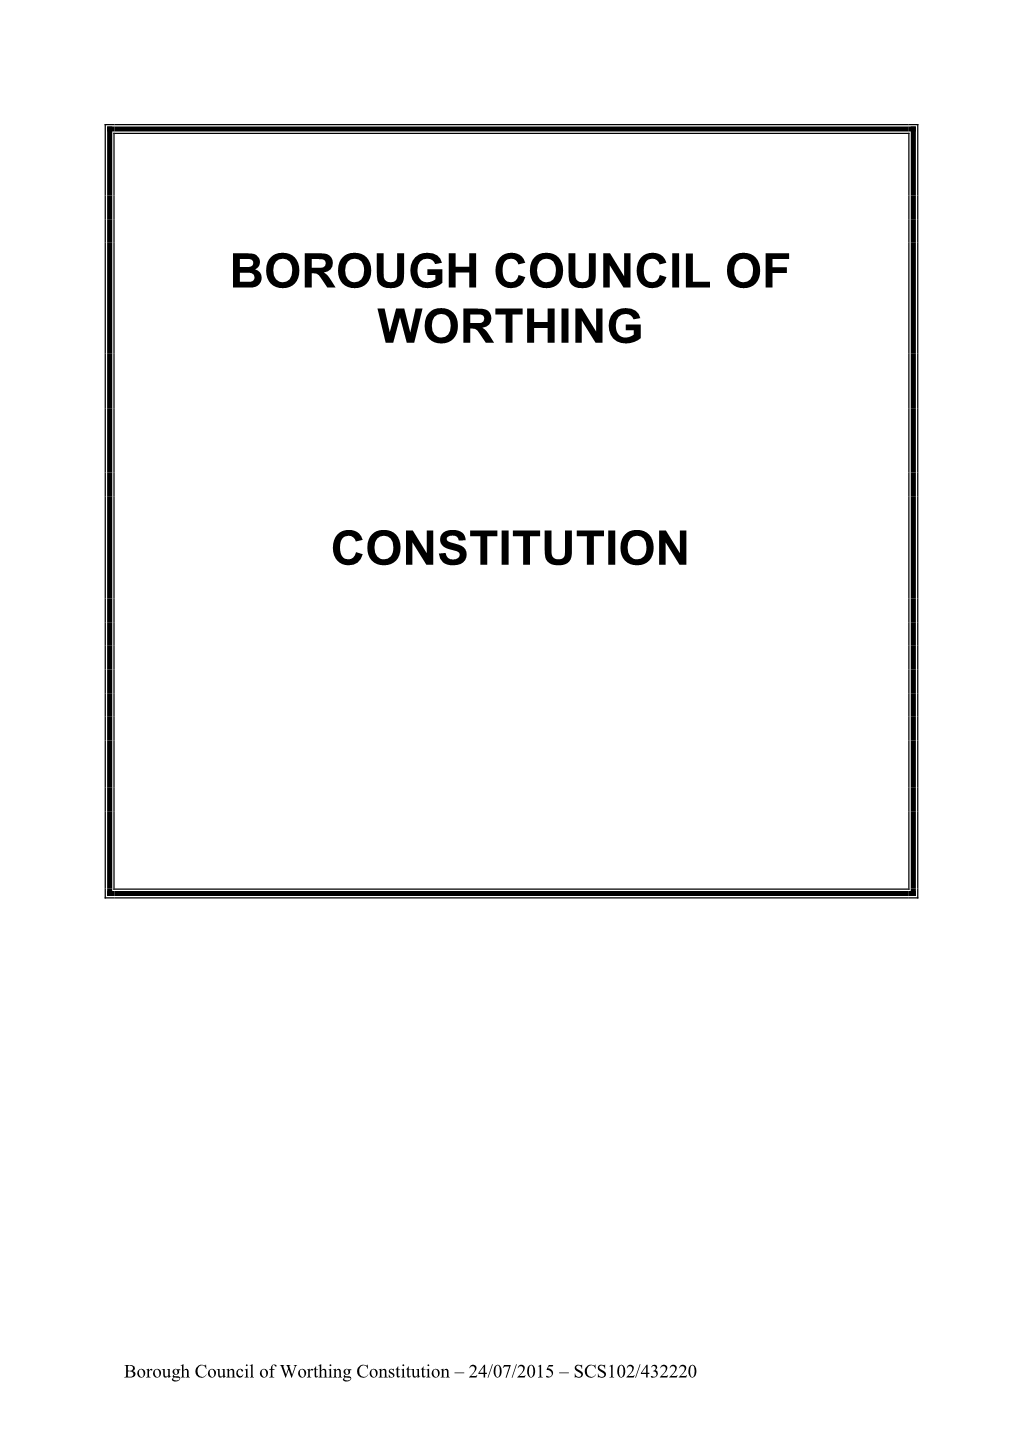 Borough Council of Worthing Constitution – 24/07/2015 – SCS102/432220